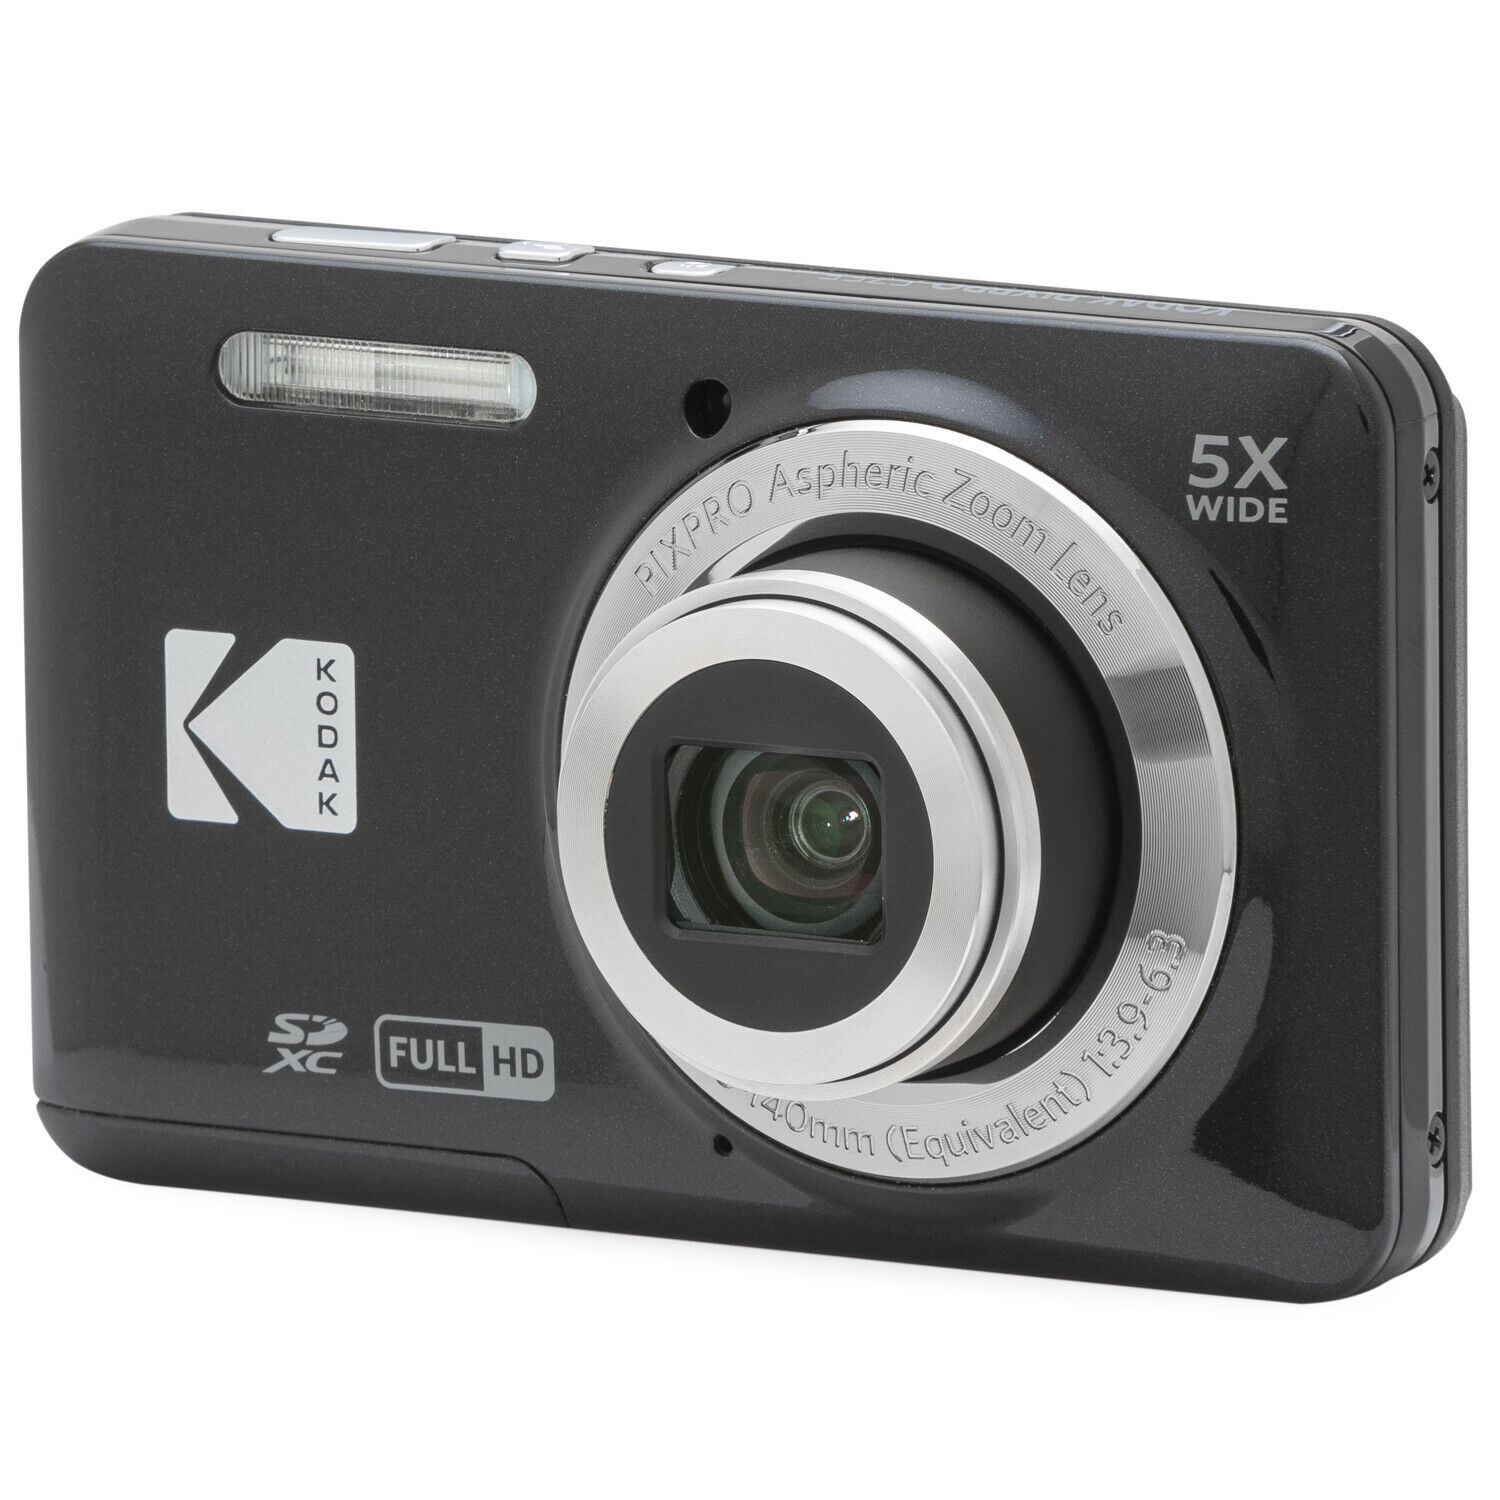 Kodak PIXPRO FZ55 Digital Camera, Black